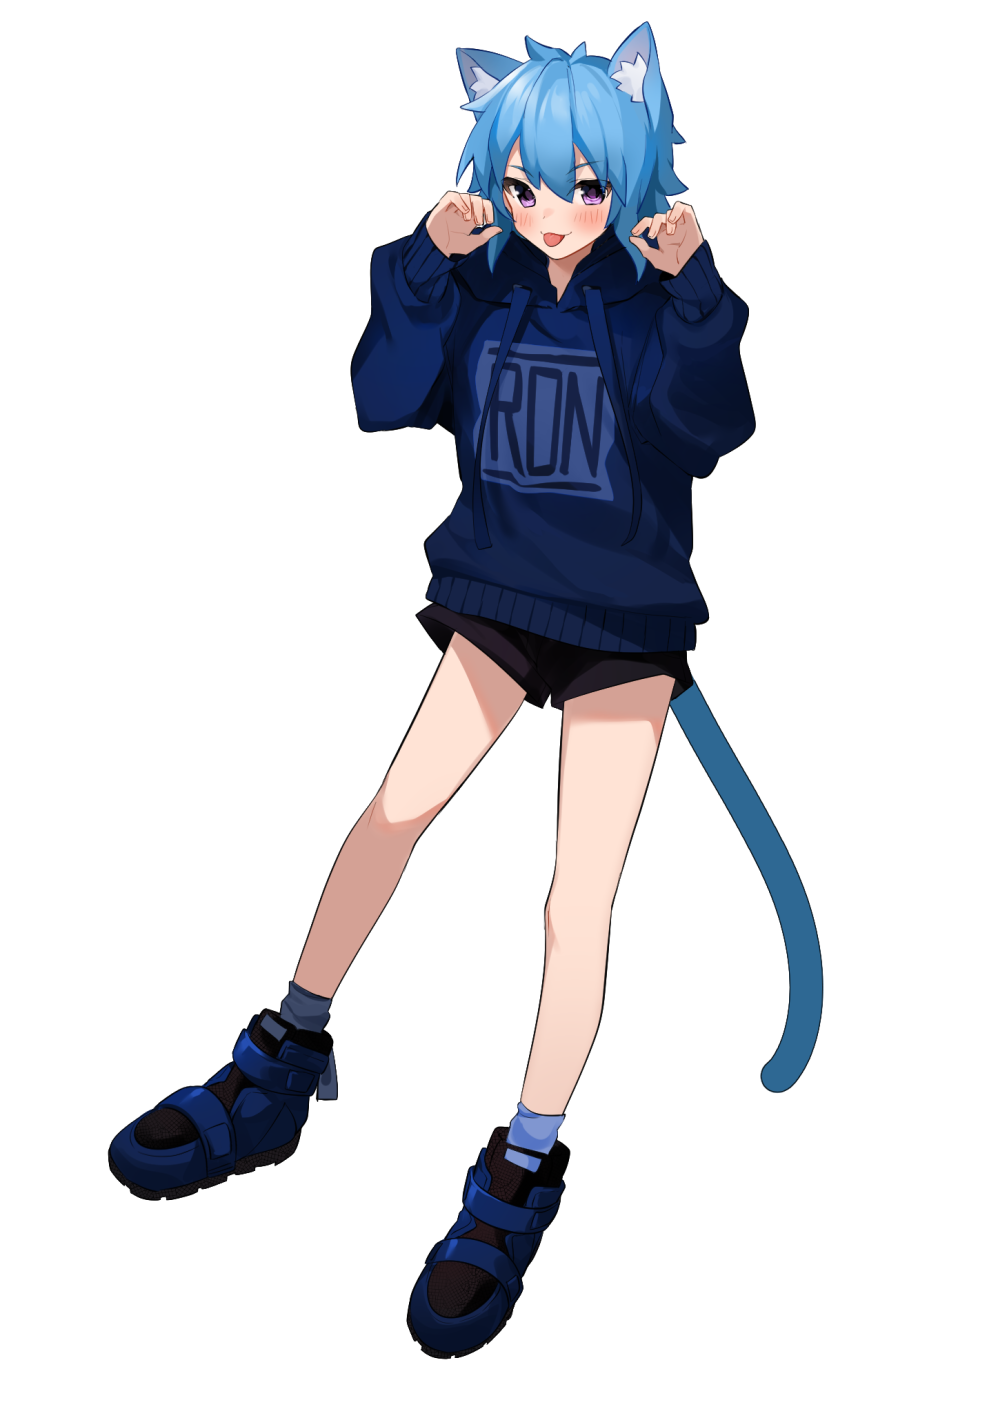 Anime 998x1407 anime anime girls digital art artwork 2D portrait display cat girl animal ears tail blue hair purple eyes tongue out blushing sweater shorts